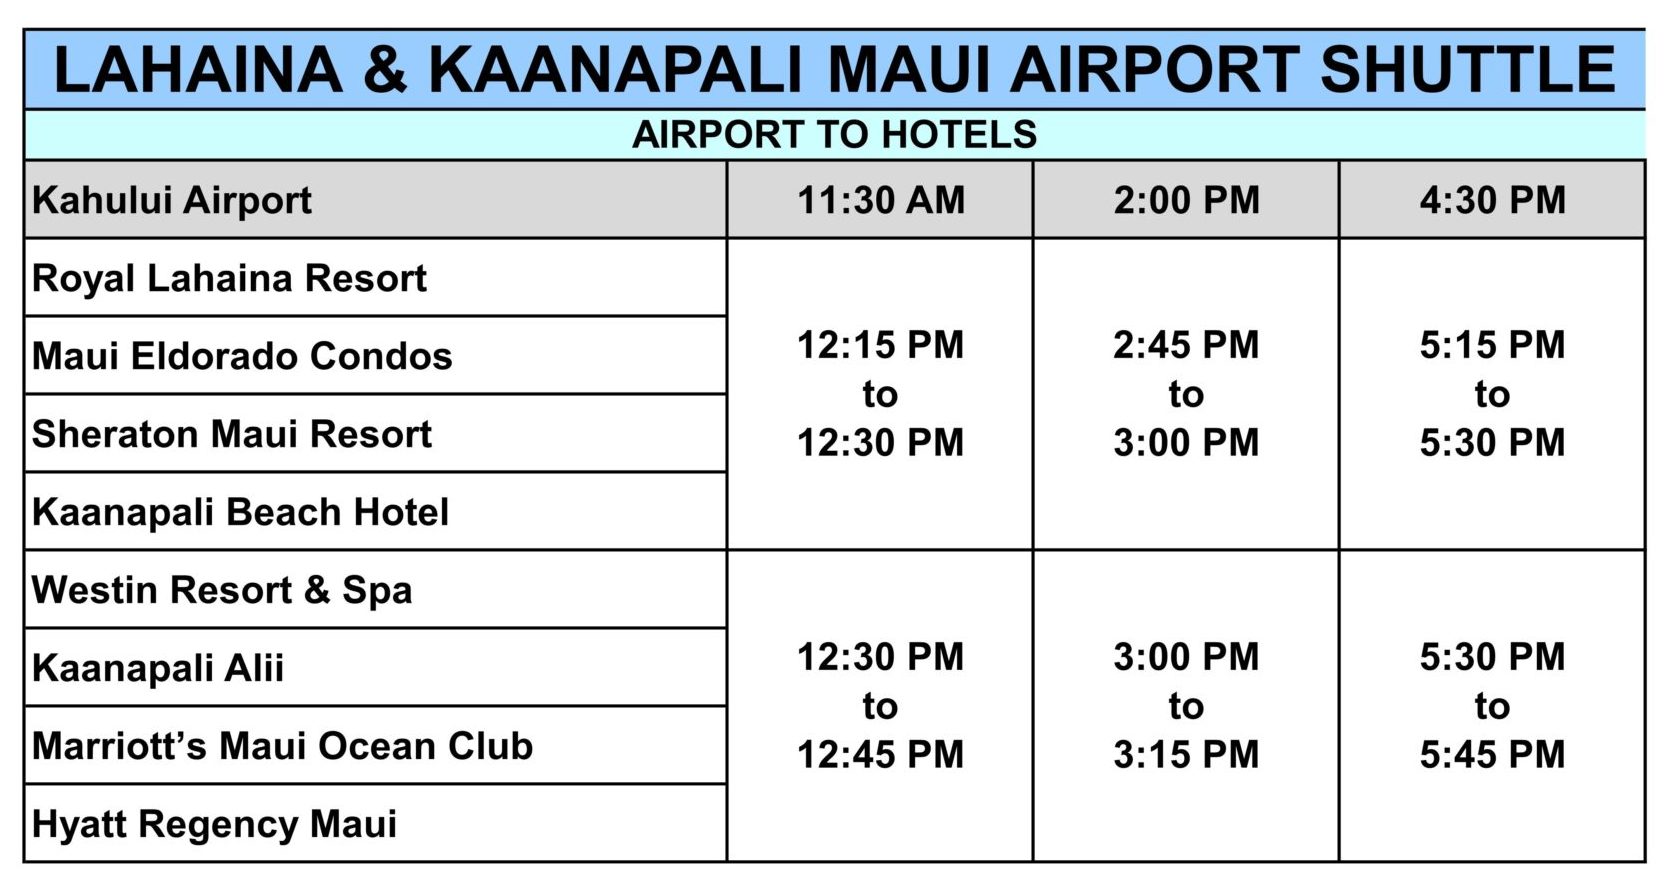 Airport Shuttle To Lahaina & Kaanapali Hotels